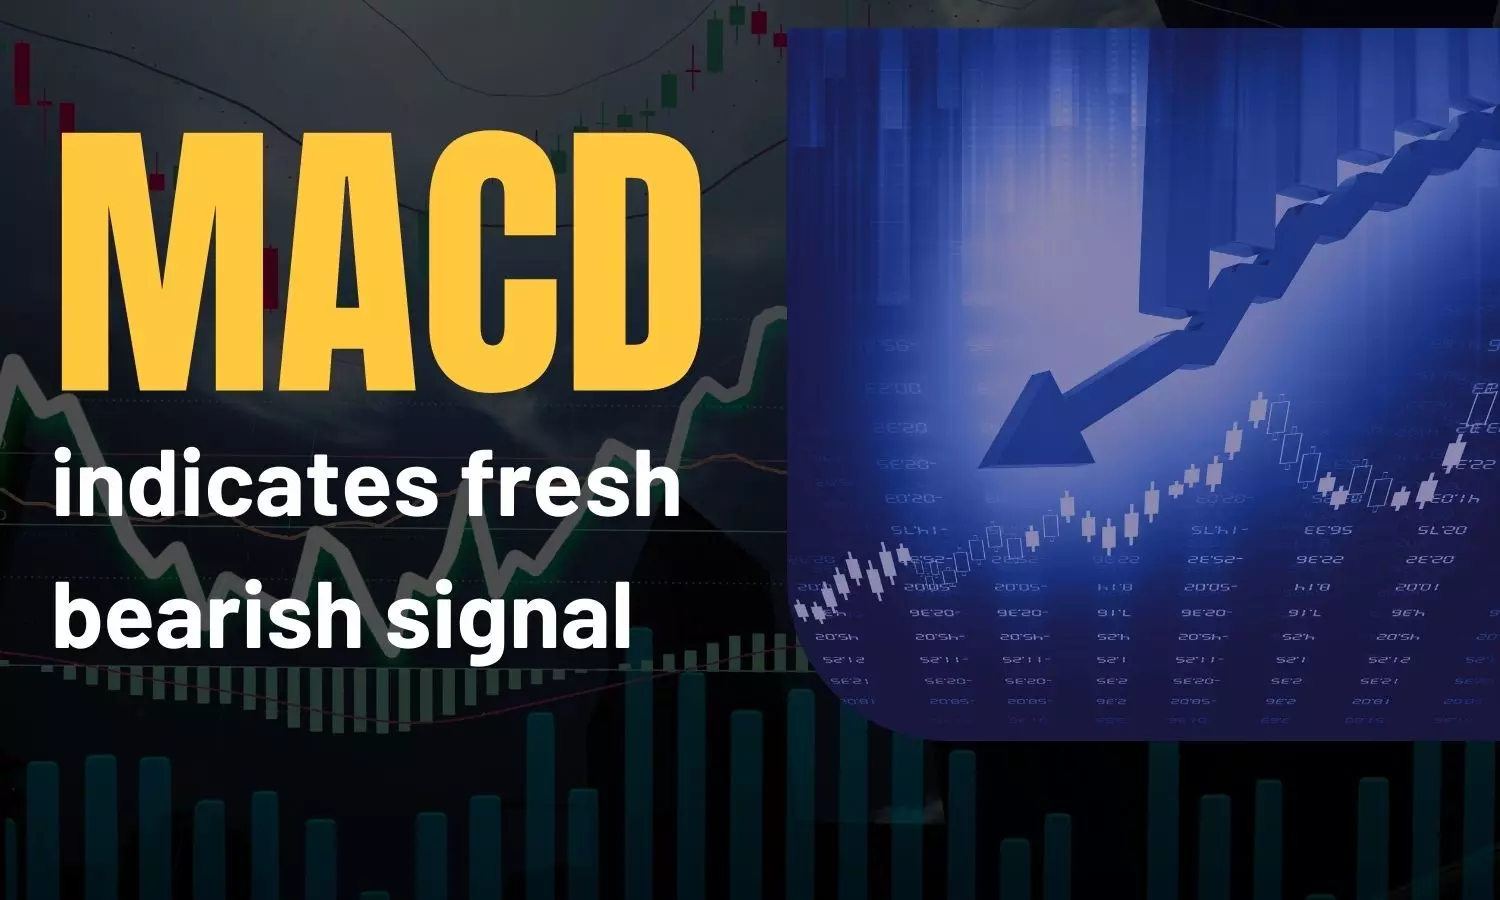 MACD indicates fresh bearish signal